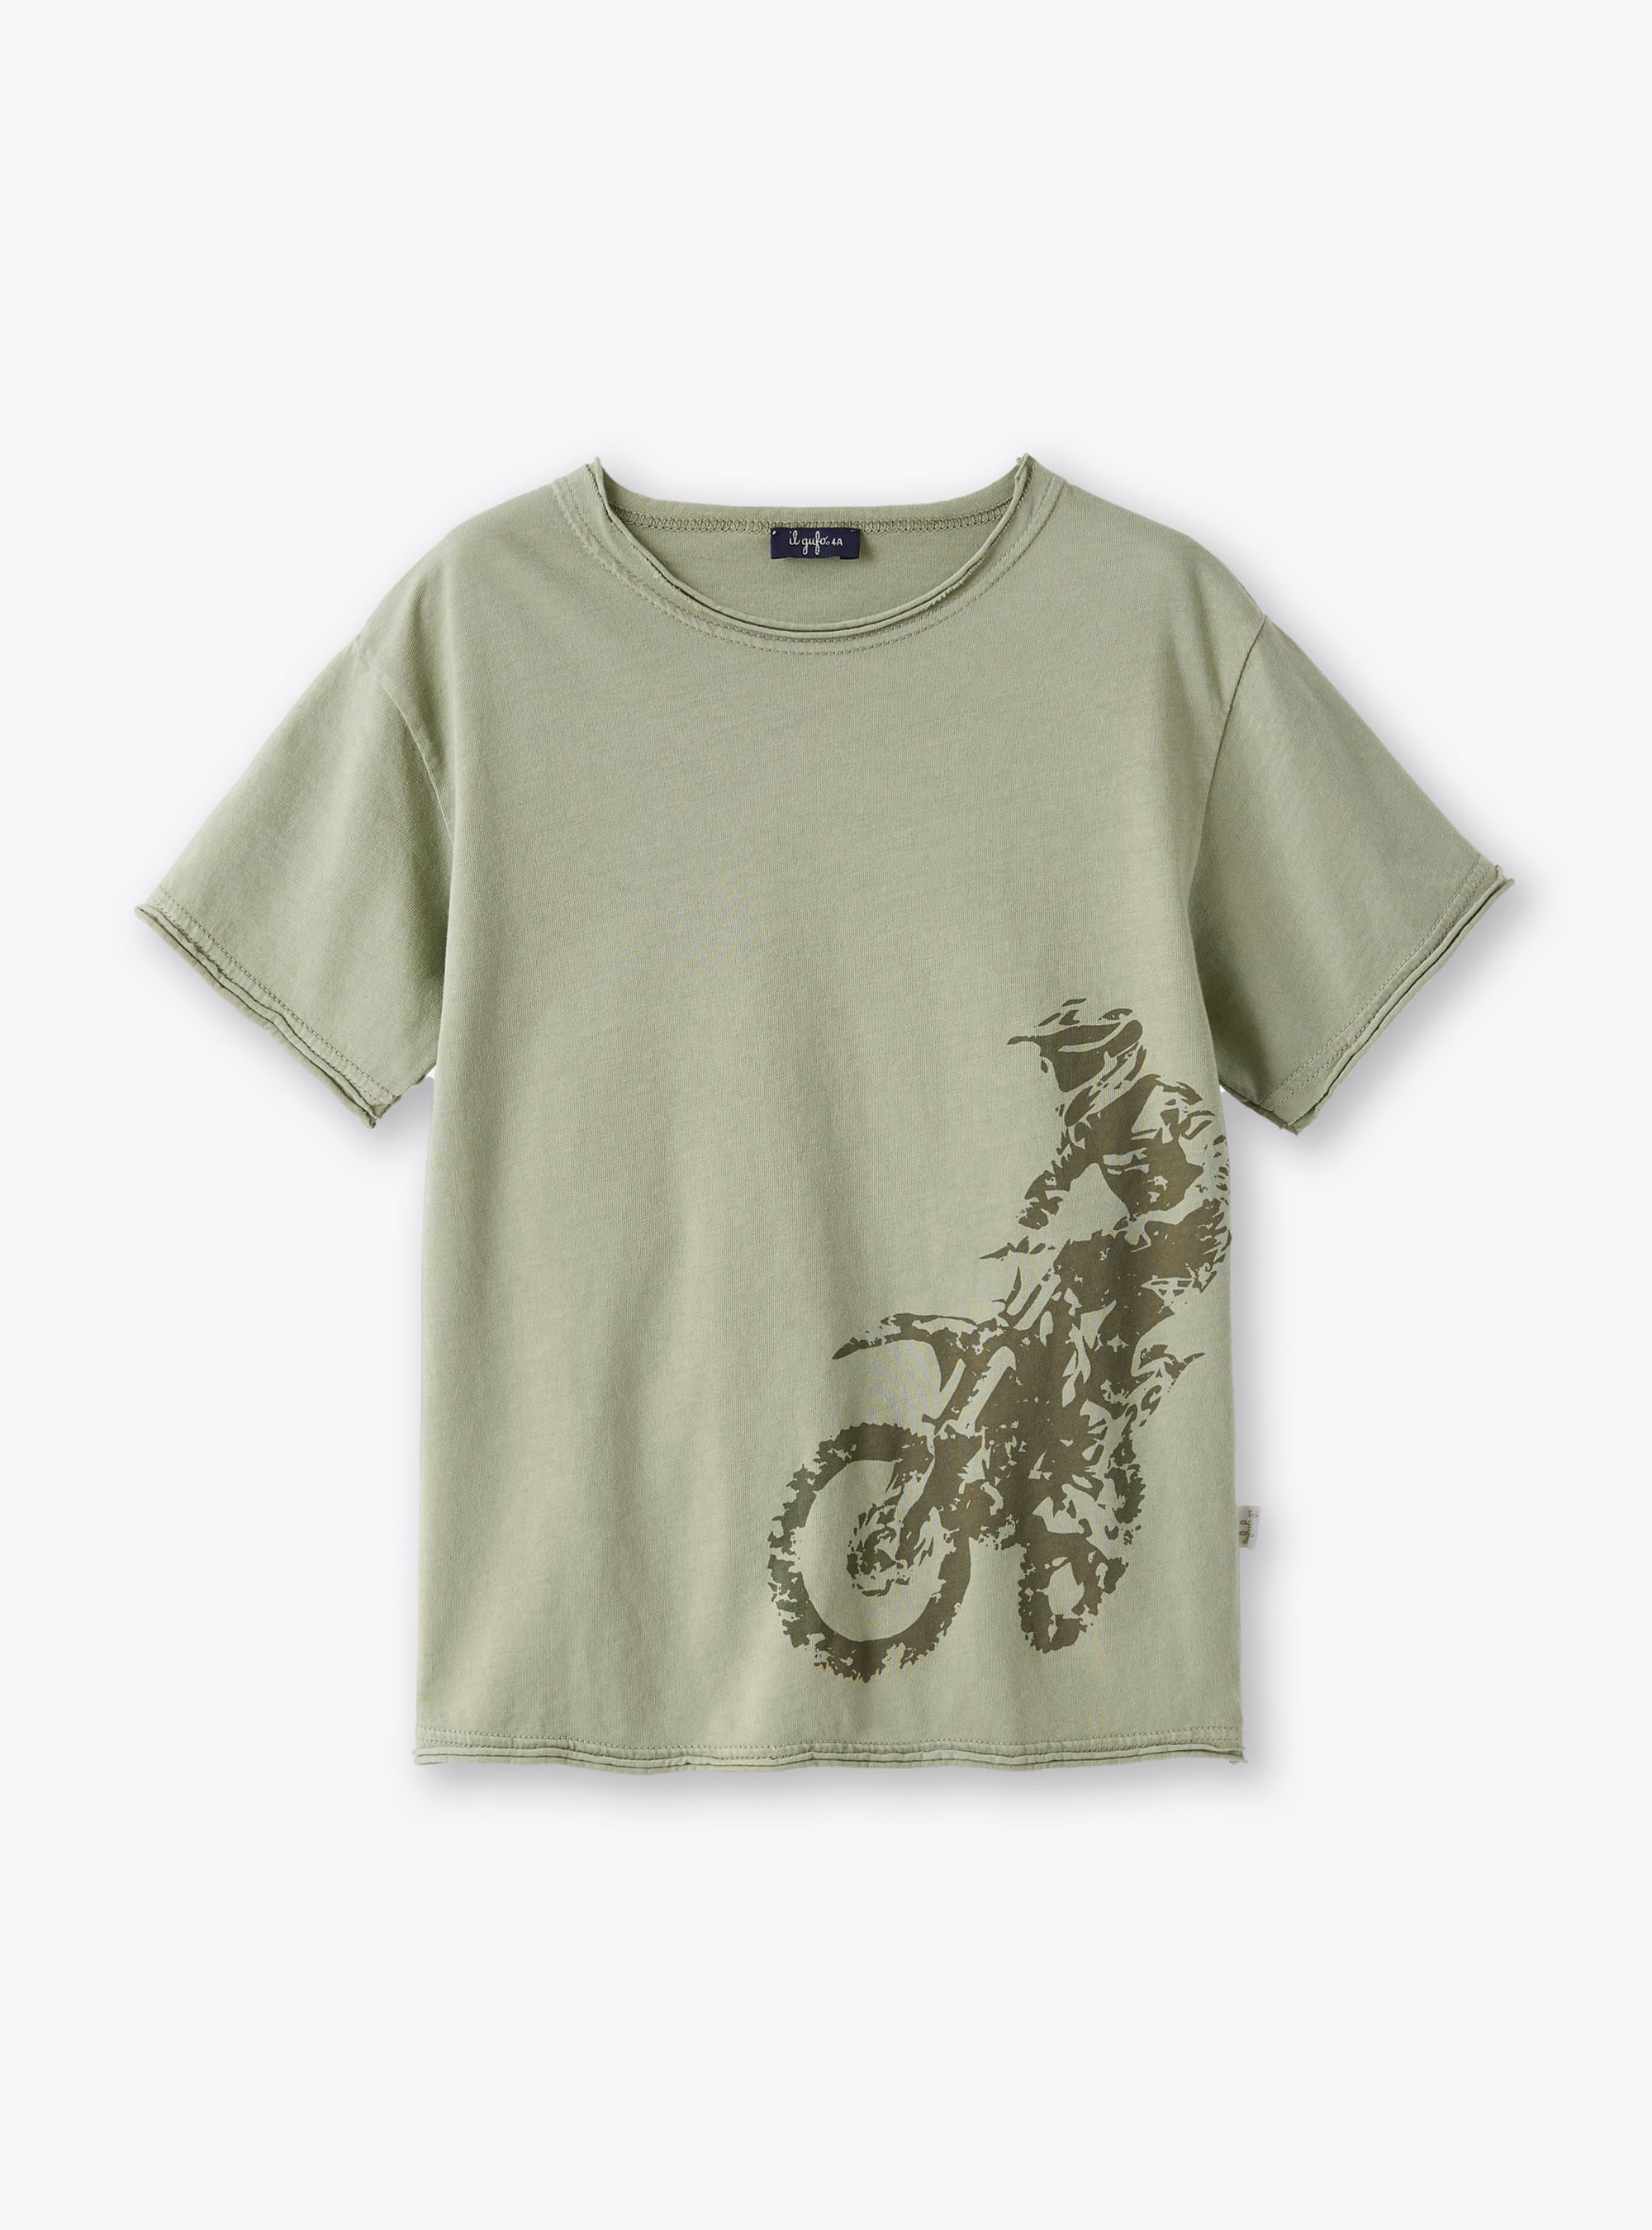 T-shirt in organic cotton with print design - Green | Il Gufo